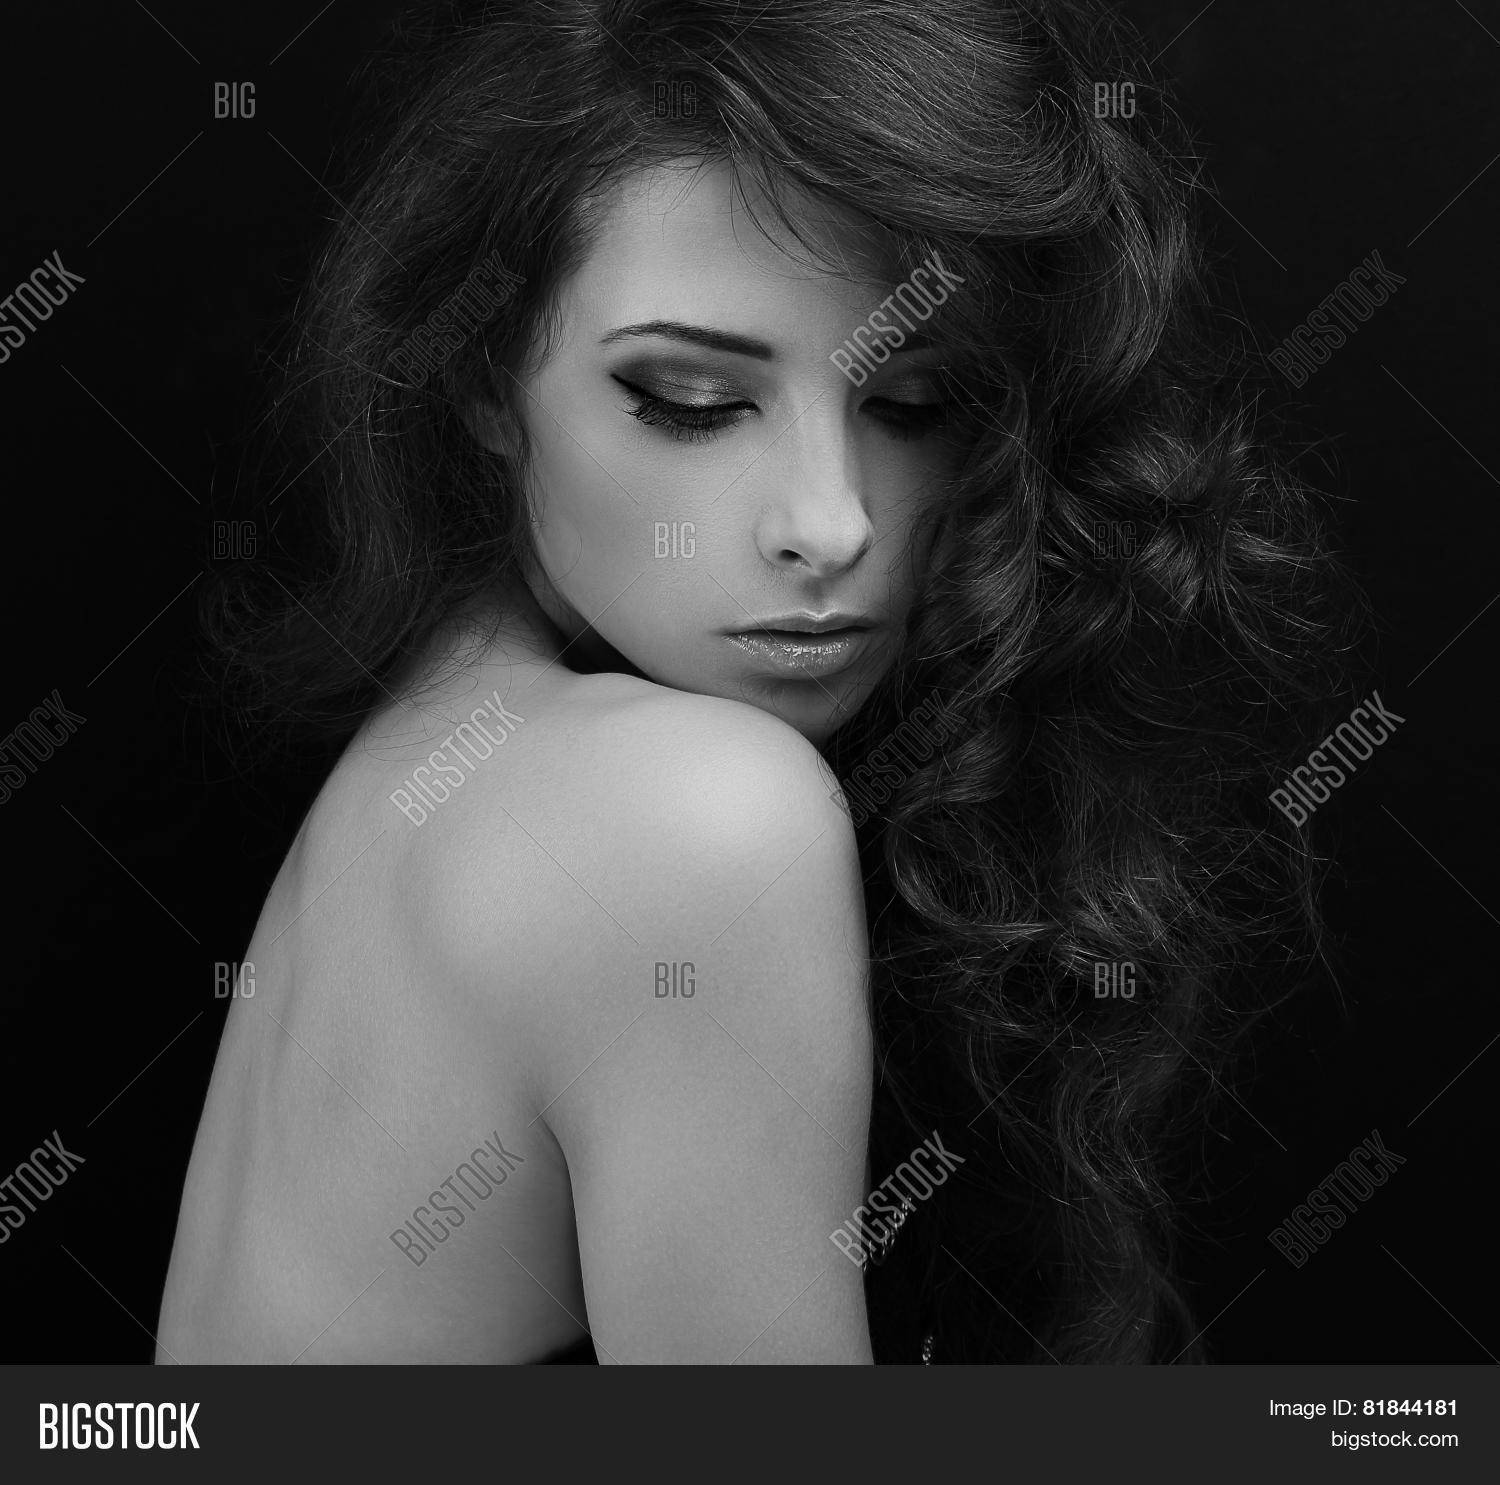 Beautiful Makeup Woman Looking Down Image & Photo | Bigstock